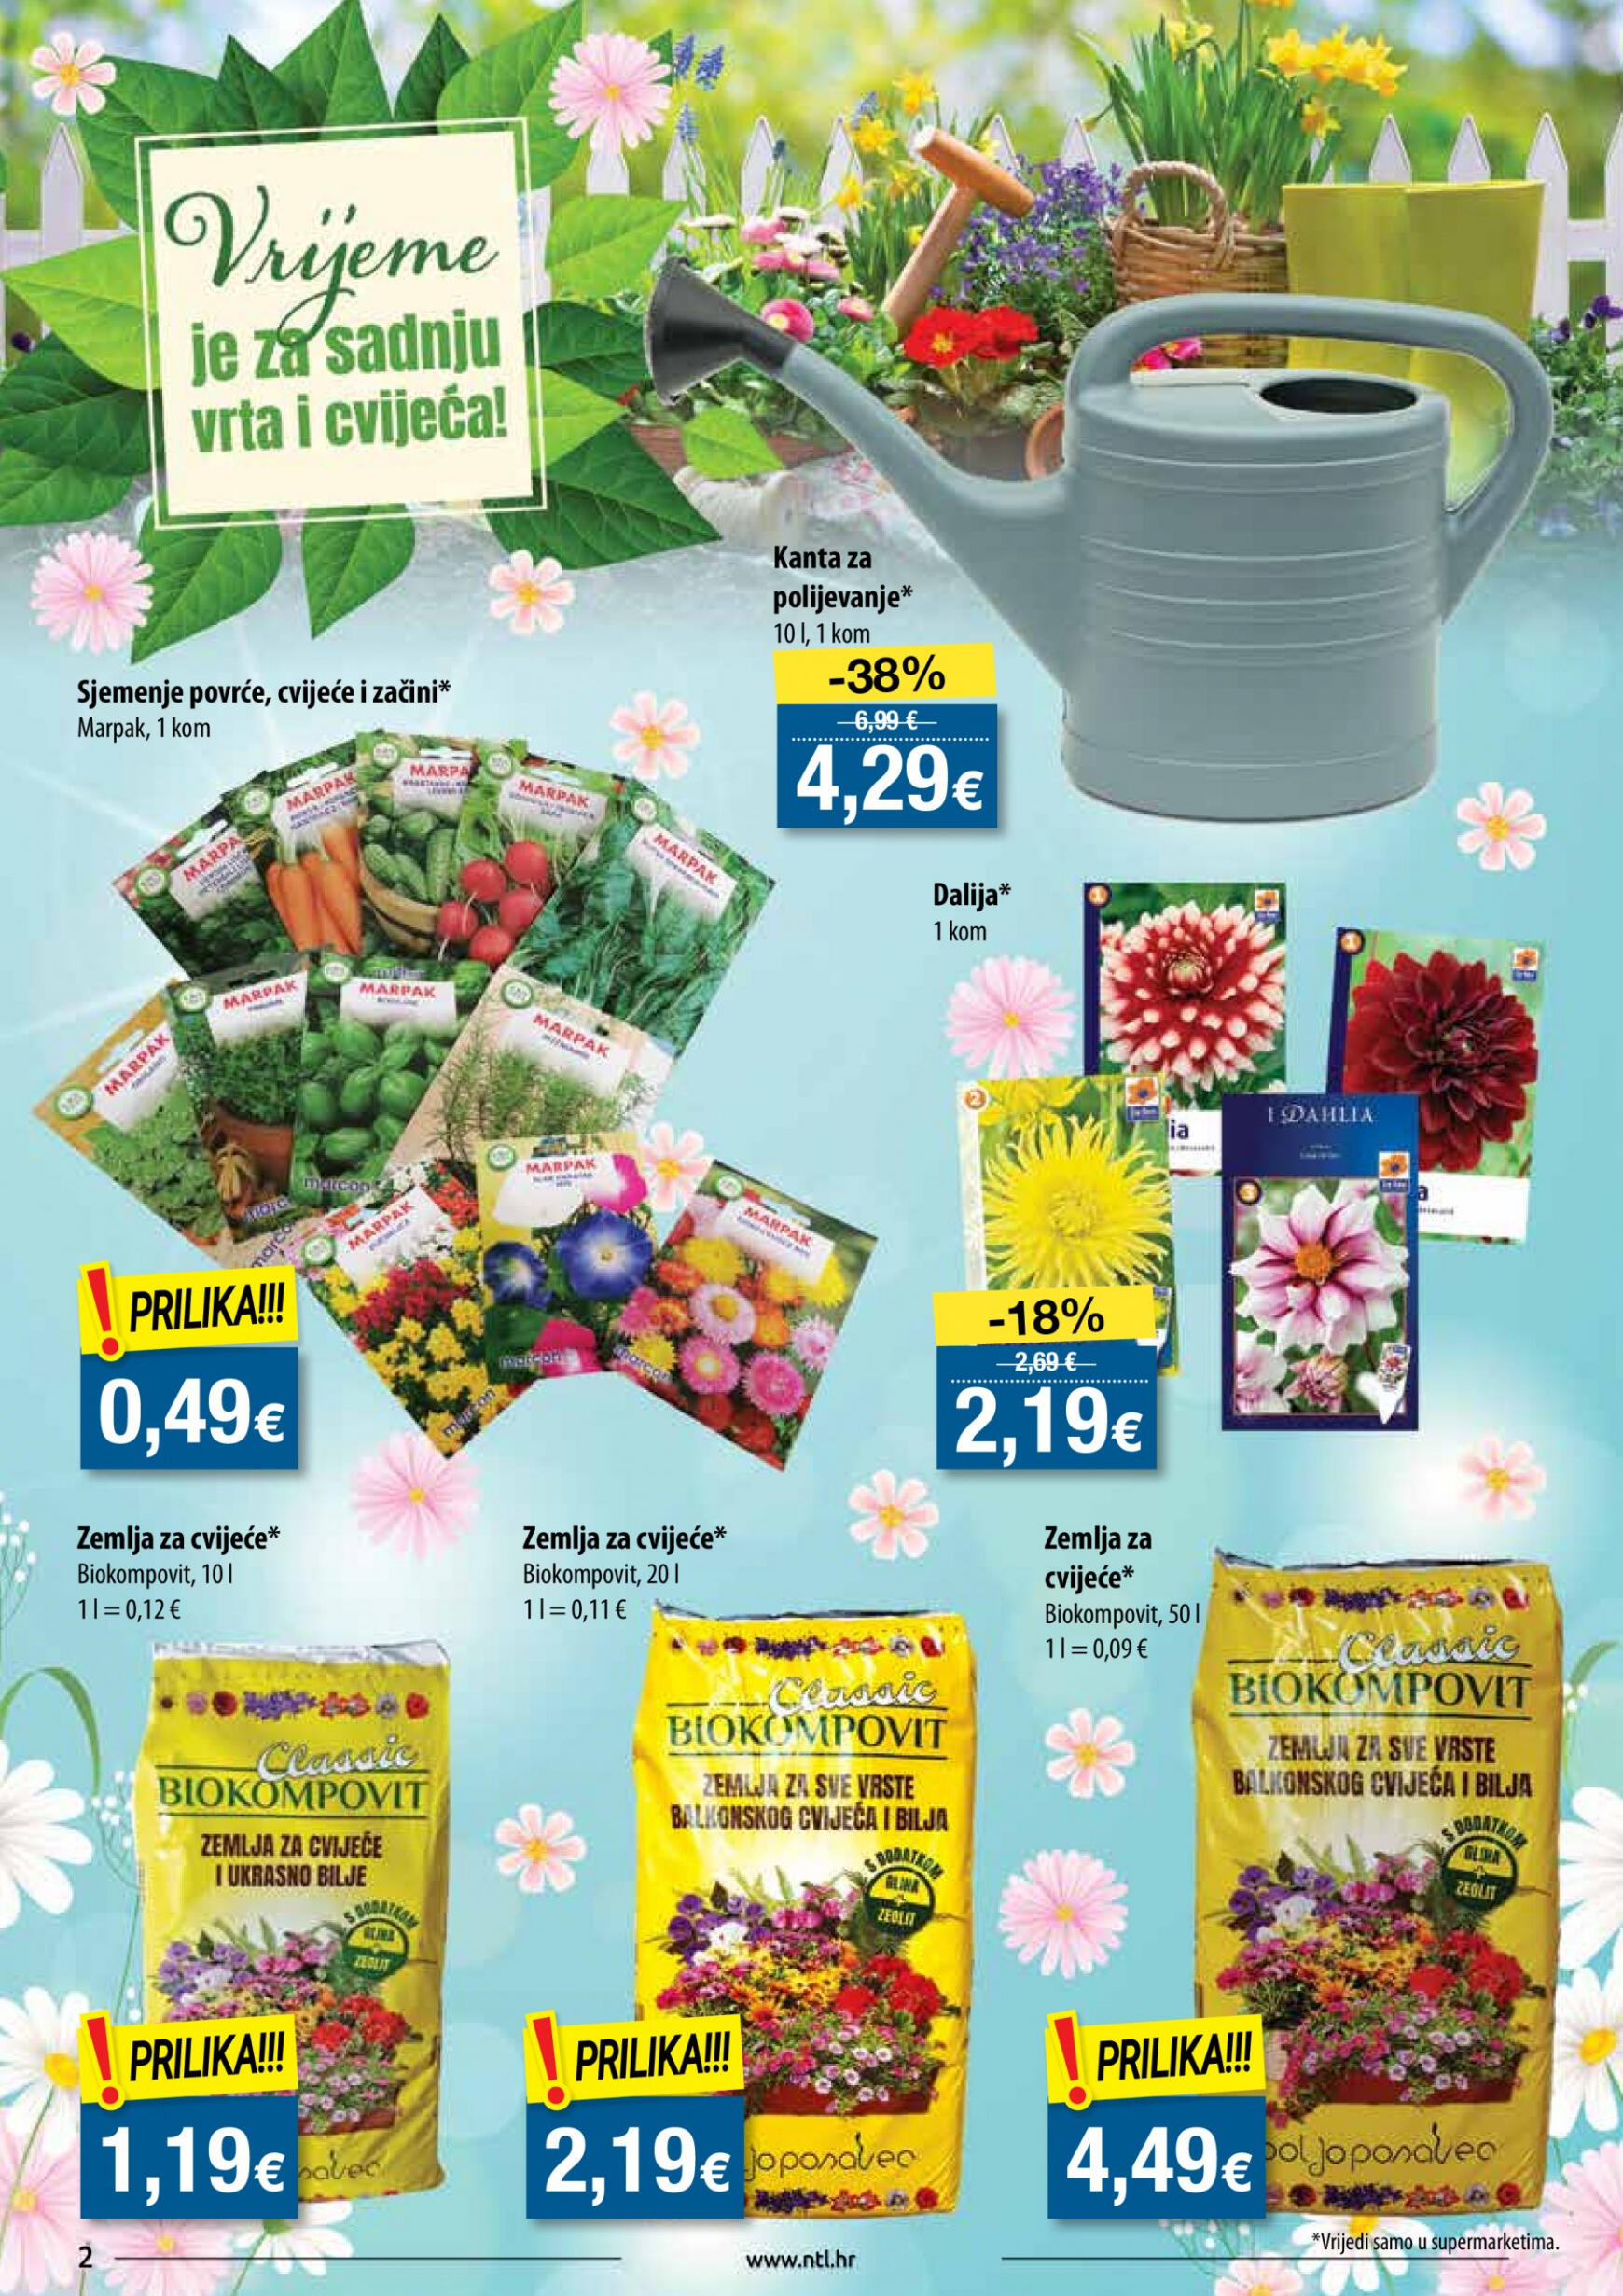 ntl - Novi katalog NTL - Supermarketi Soblinec, Krapina, Duga Resa 10.04. - 16.04. - page: 2